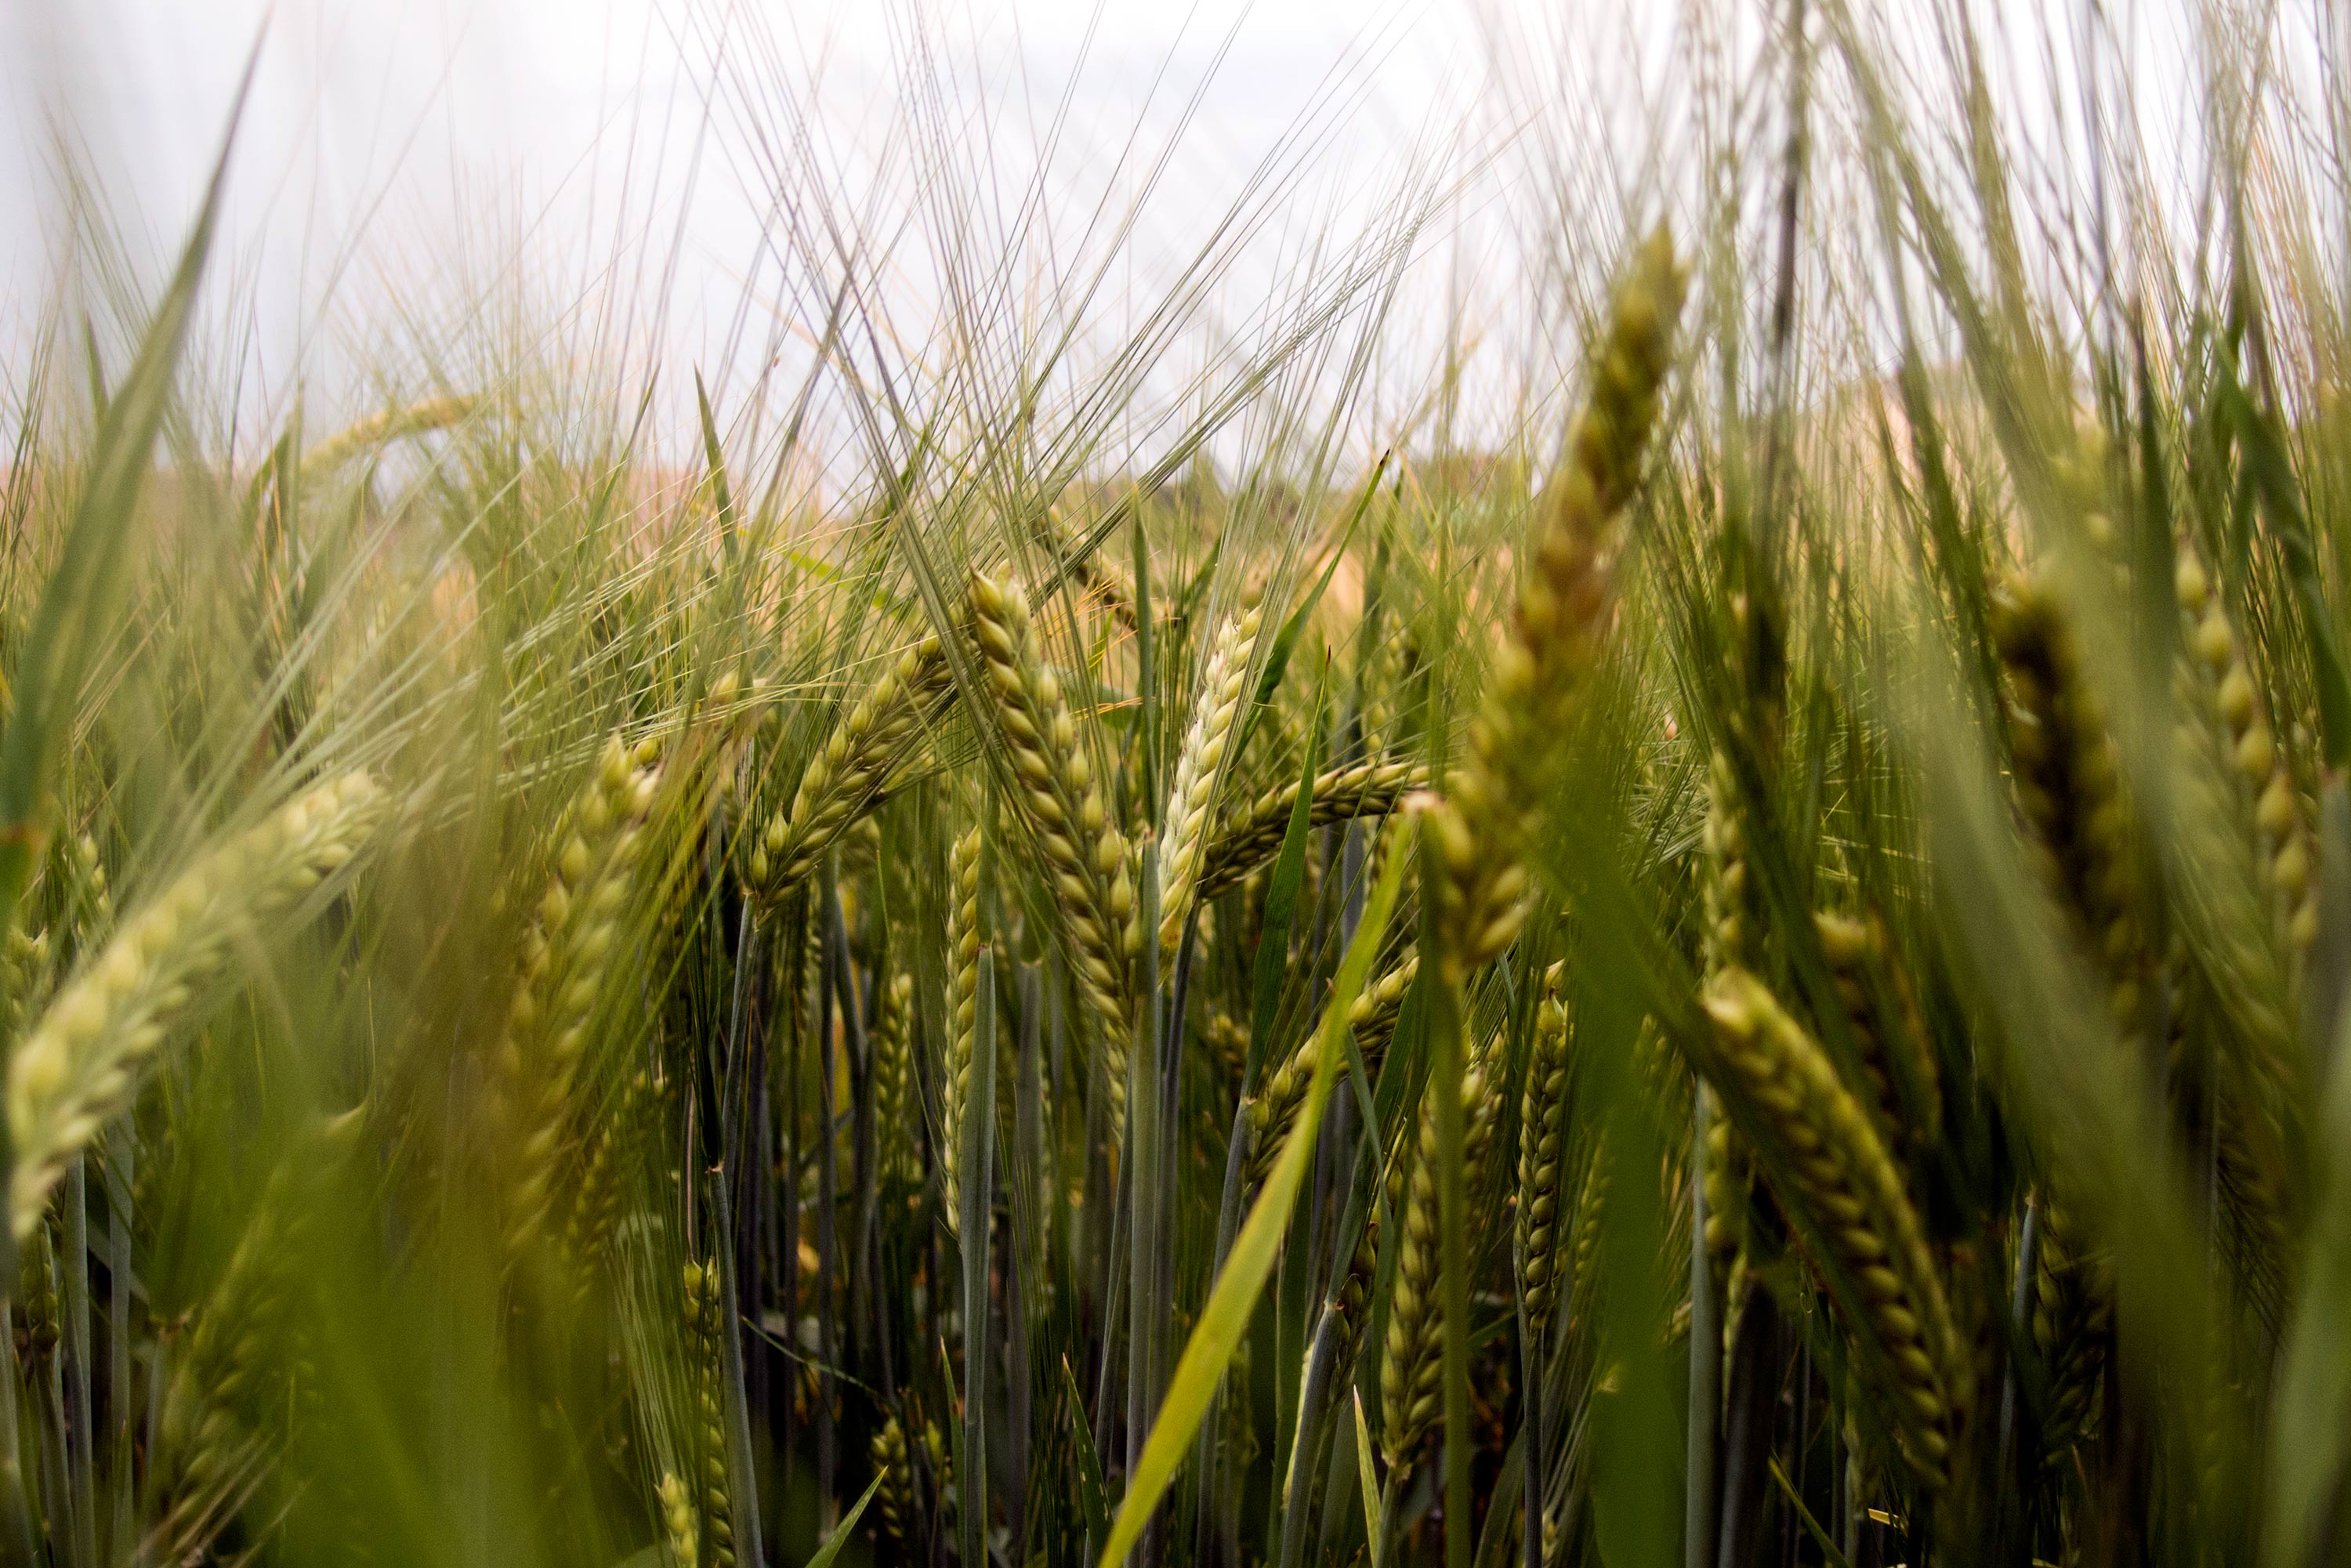 Green Barley On The Field | Free Stock Photo | LibreShot